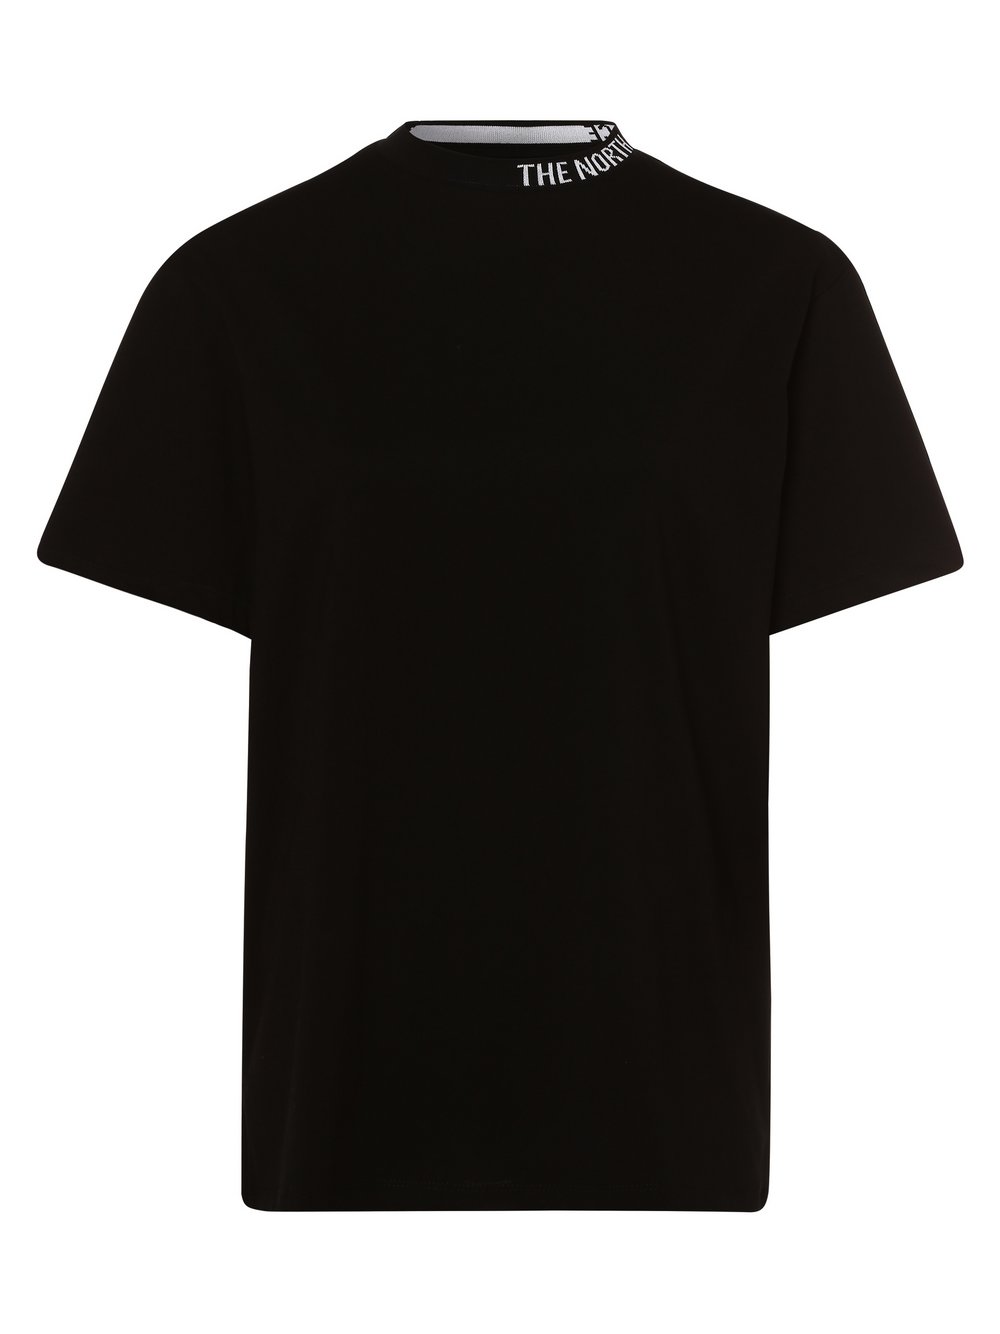 The North Face - T-shirt damski, czarny